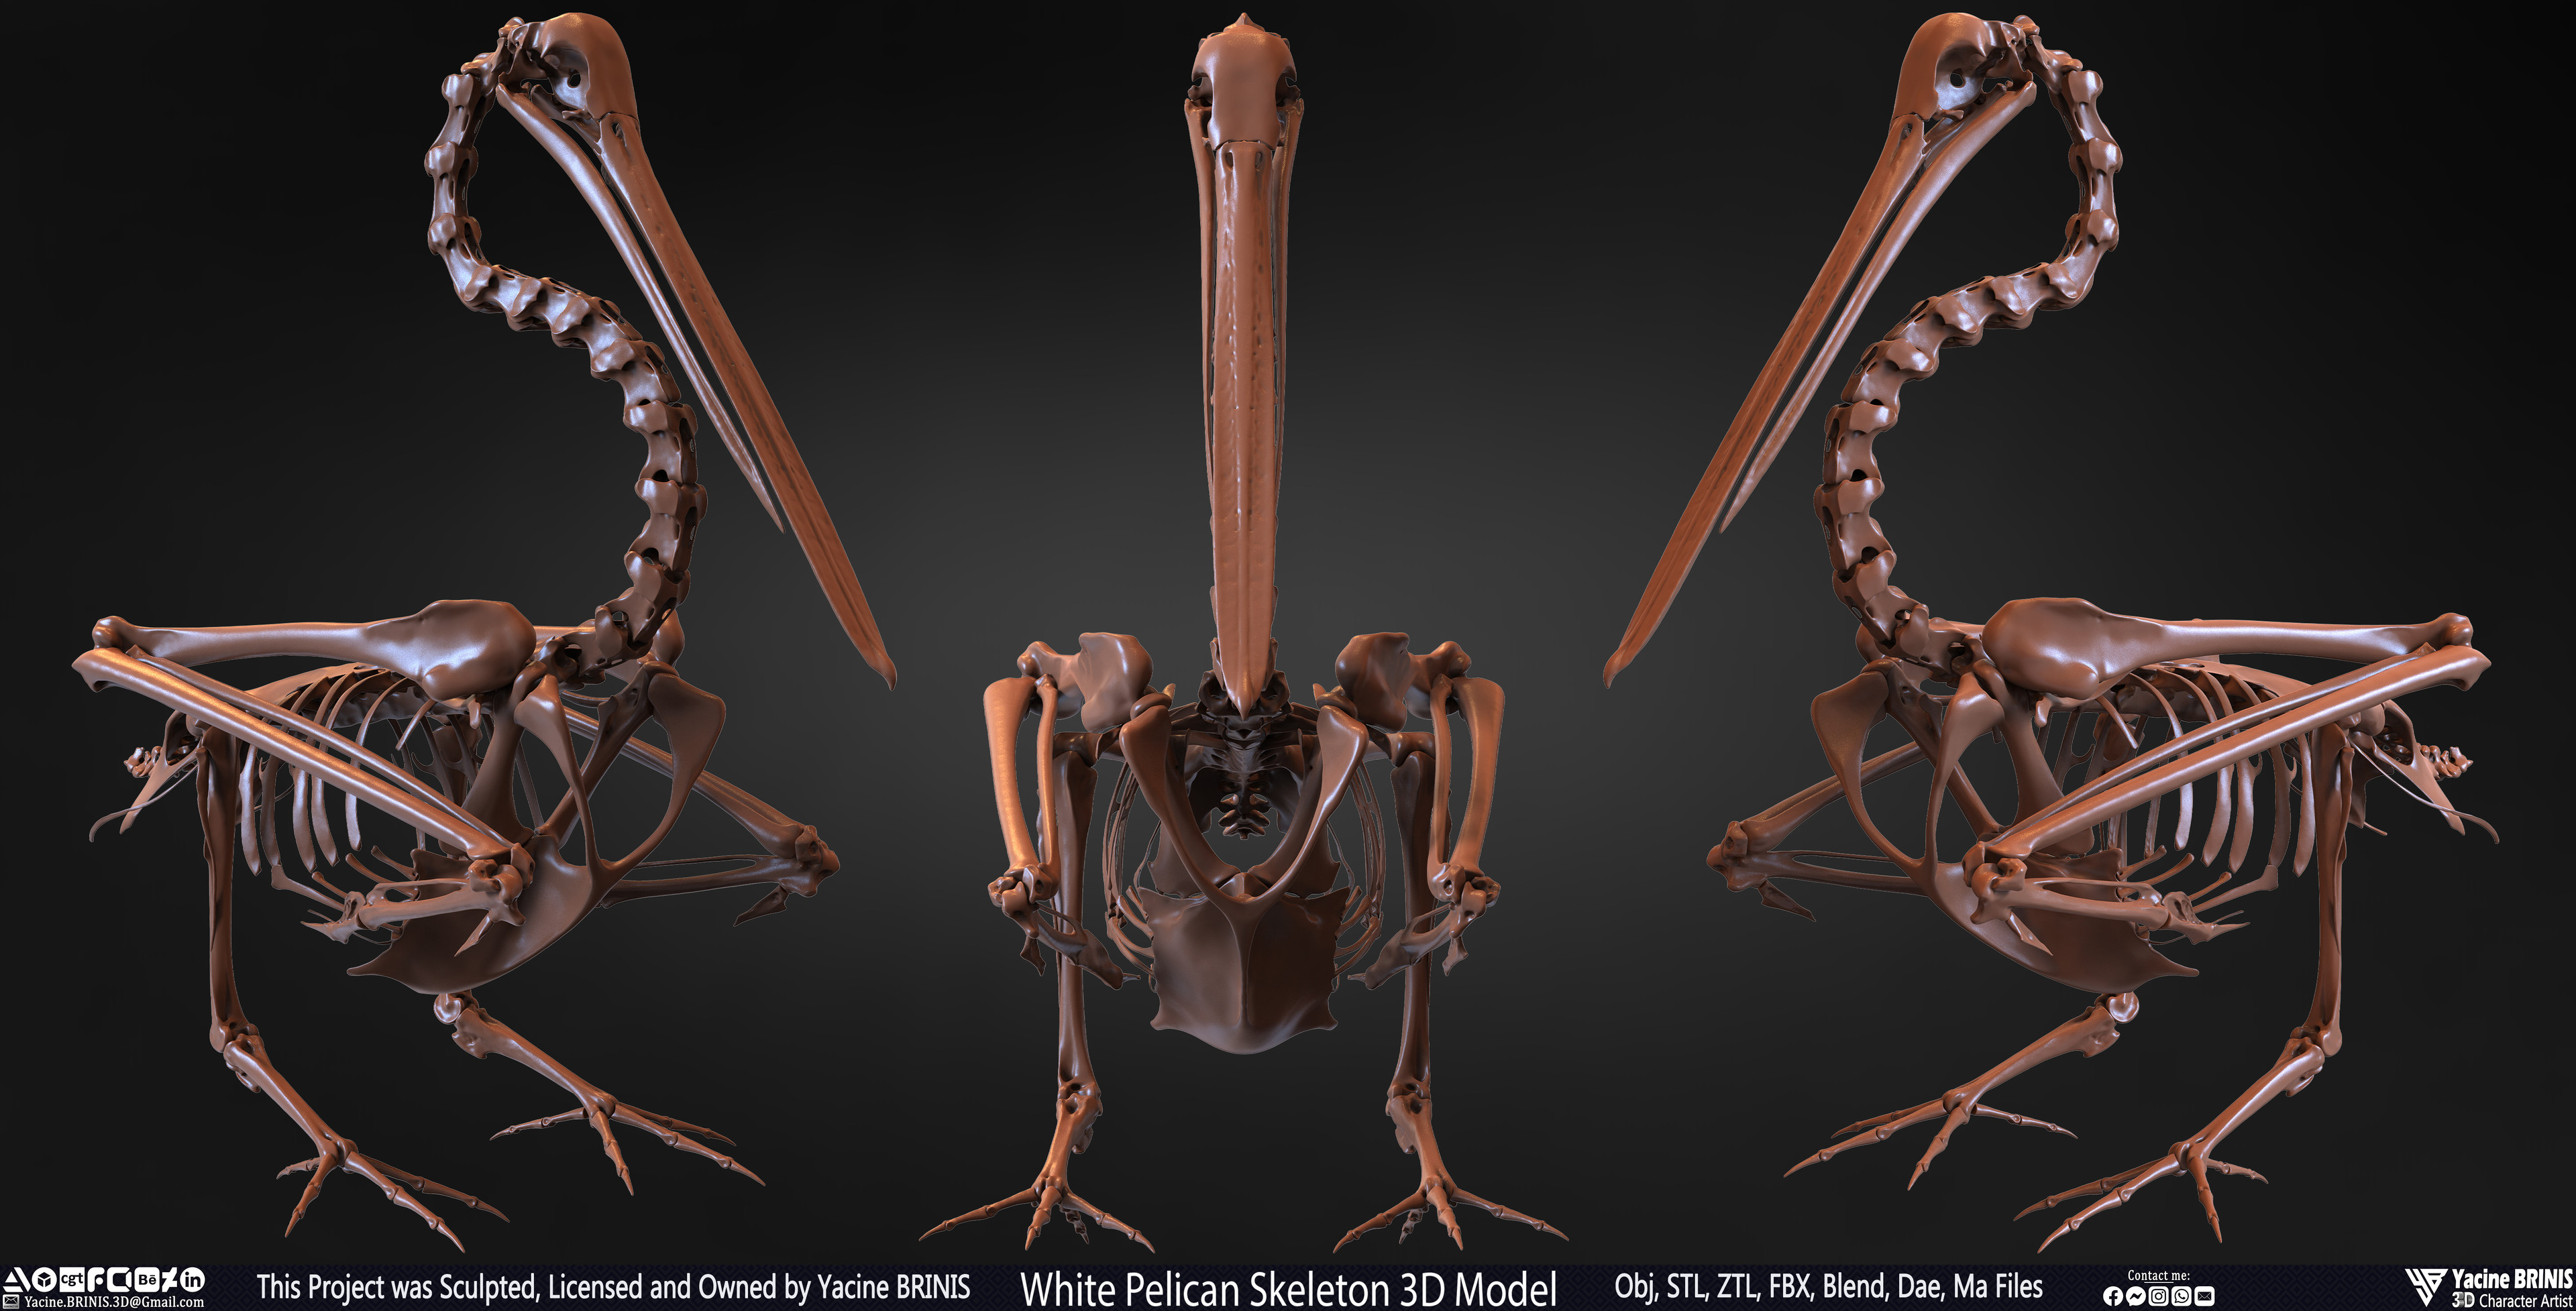 White Pelican Skeleton 3D Model Sculpted by Yacine BRINIS Set 001